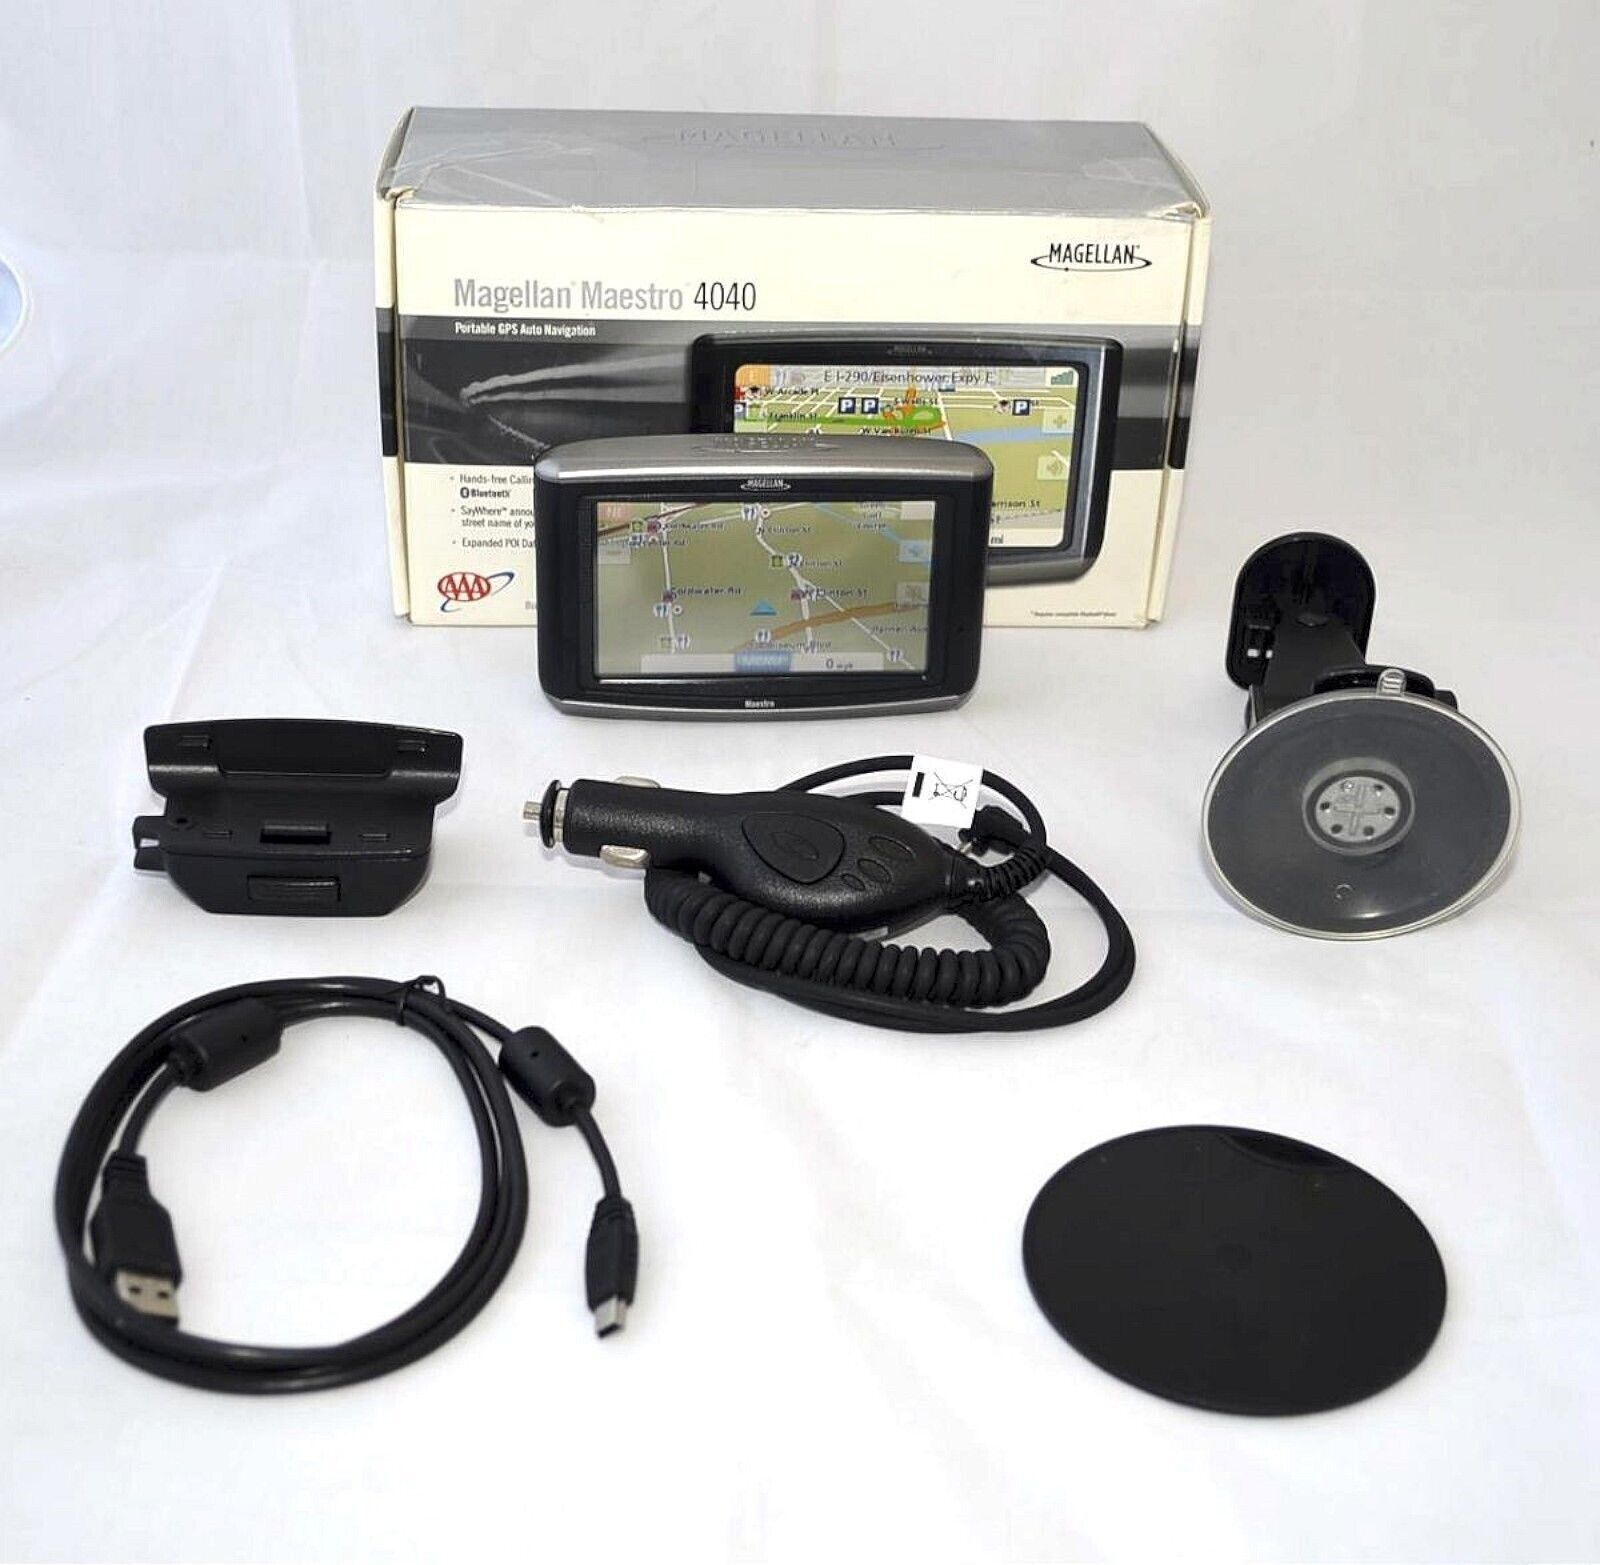 NEW Magellan Maestro 4040 Car Portable GPS Navigator System 4.3" LCD Screen maps - $45.13